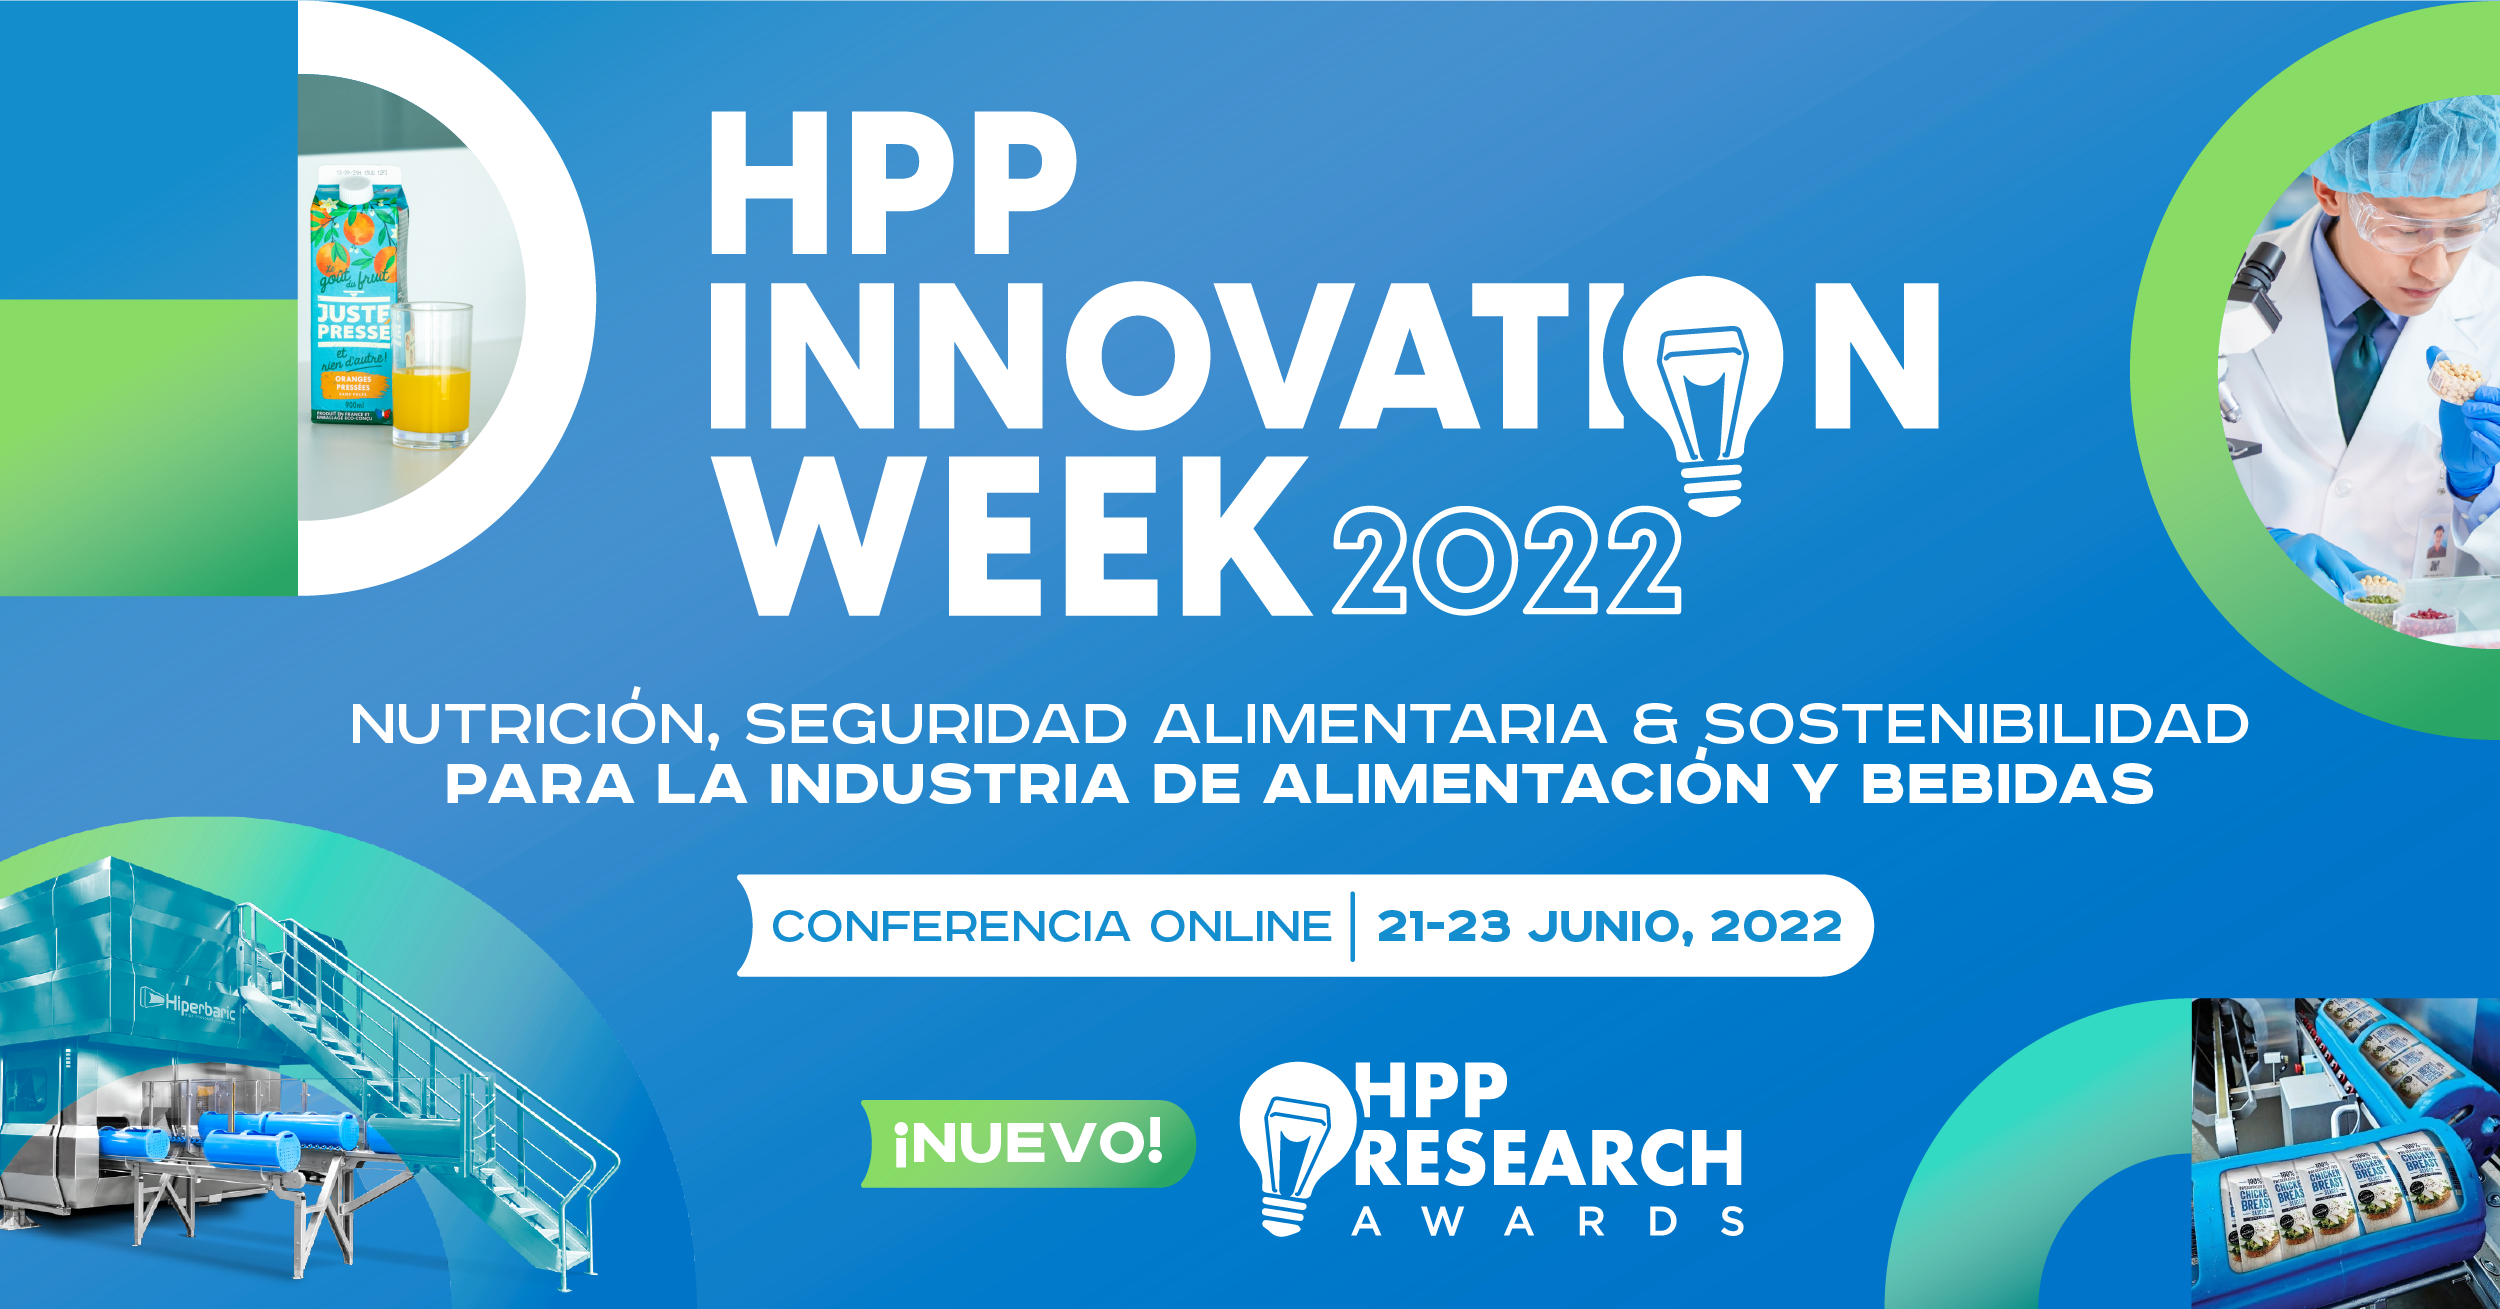 HPP Innovation Week 